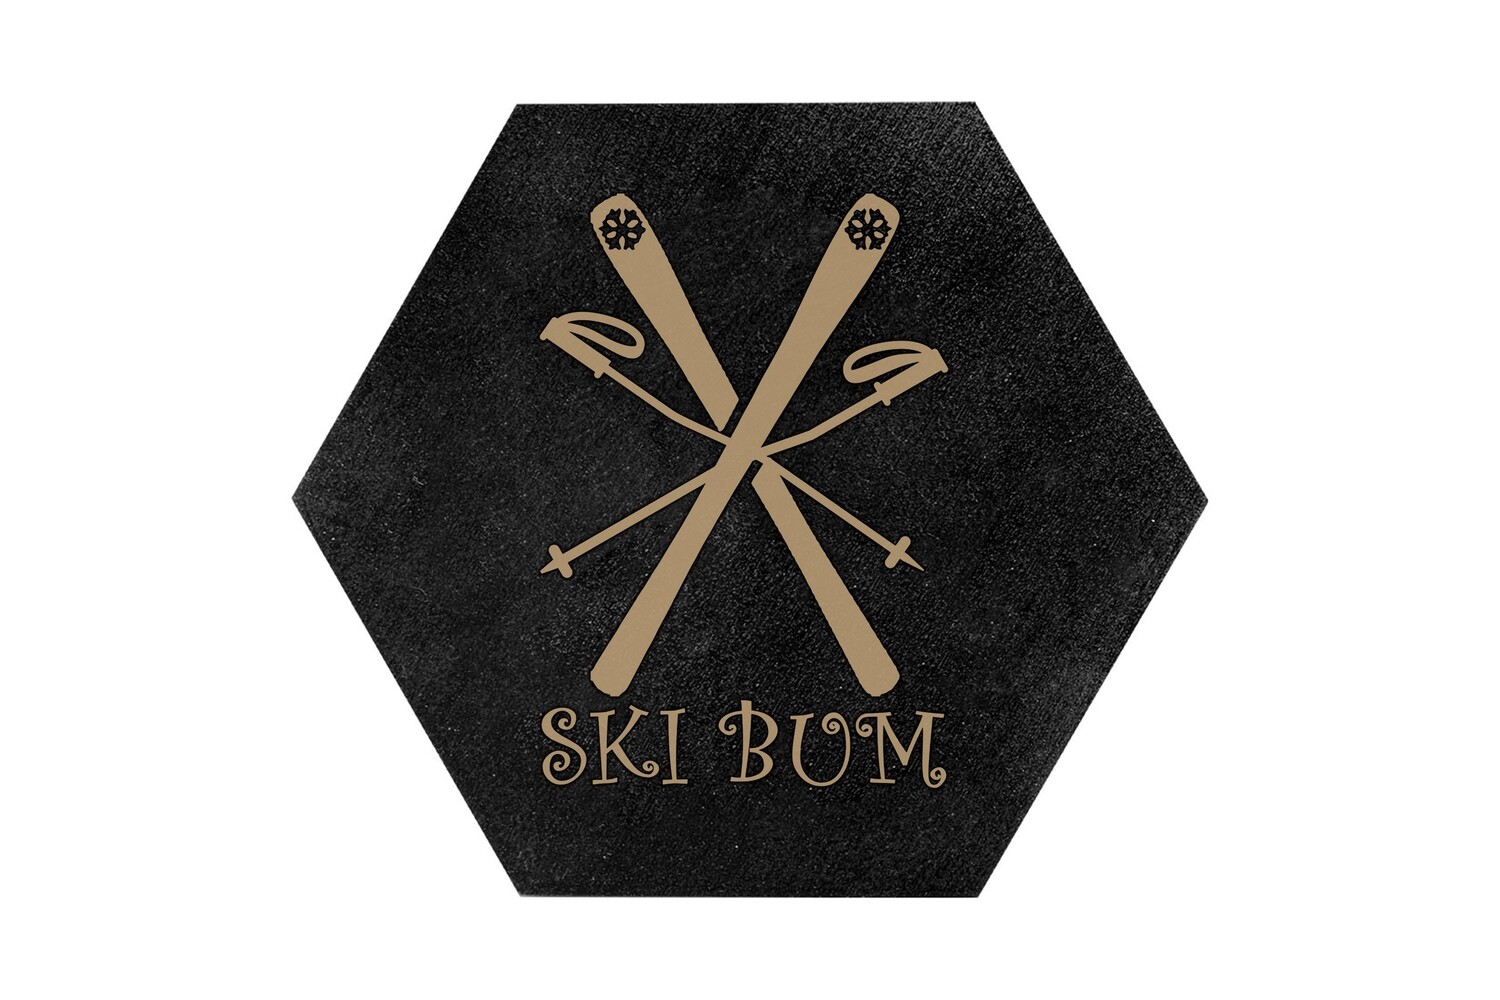 Ski Bum HEX Hand-Painted Wood Coaster Set